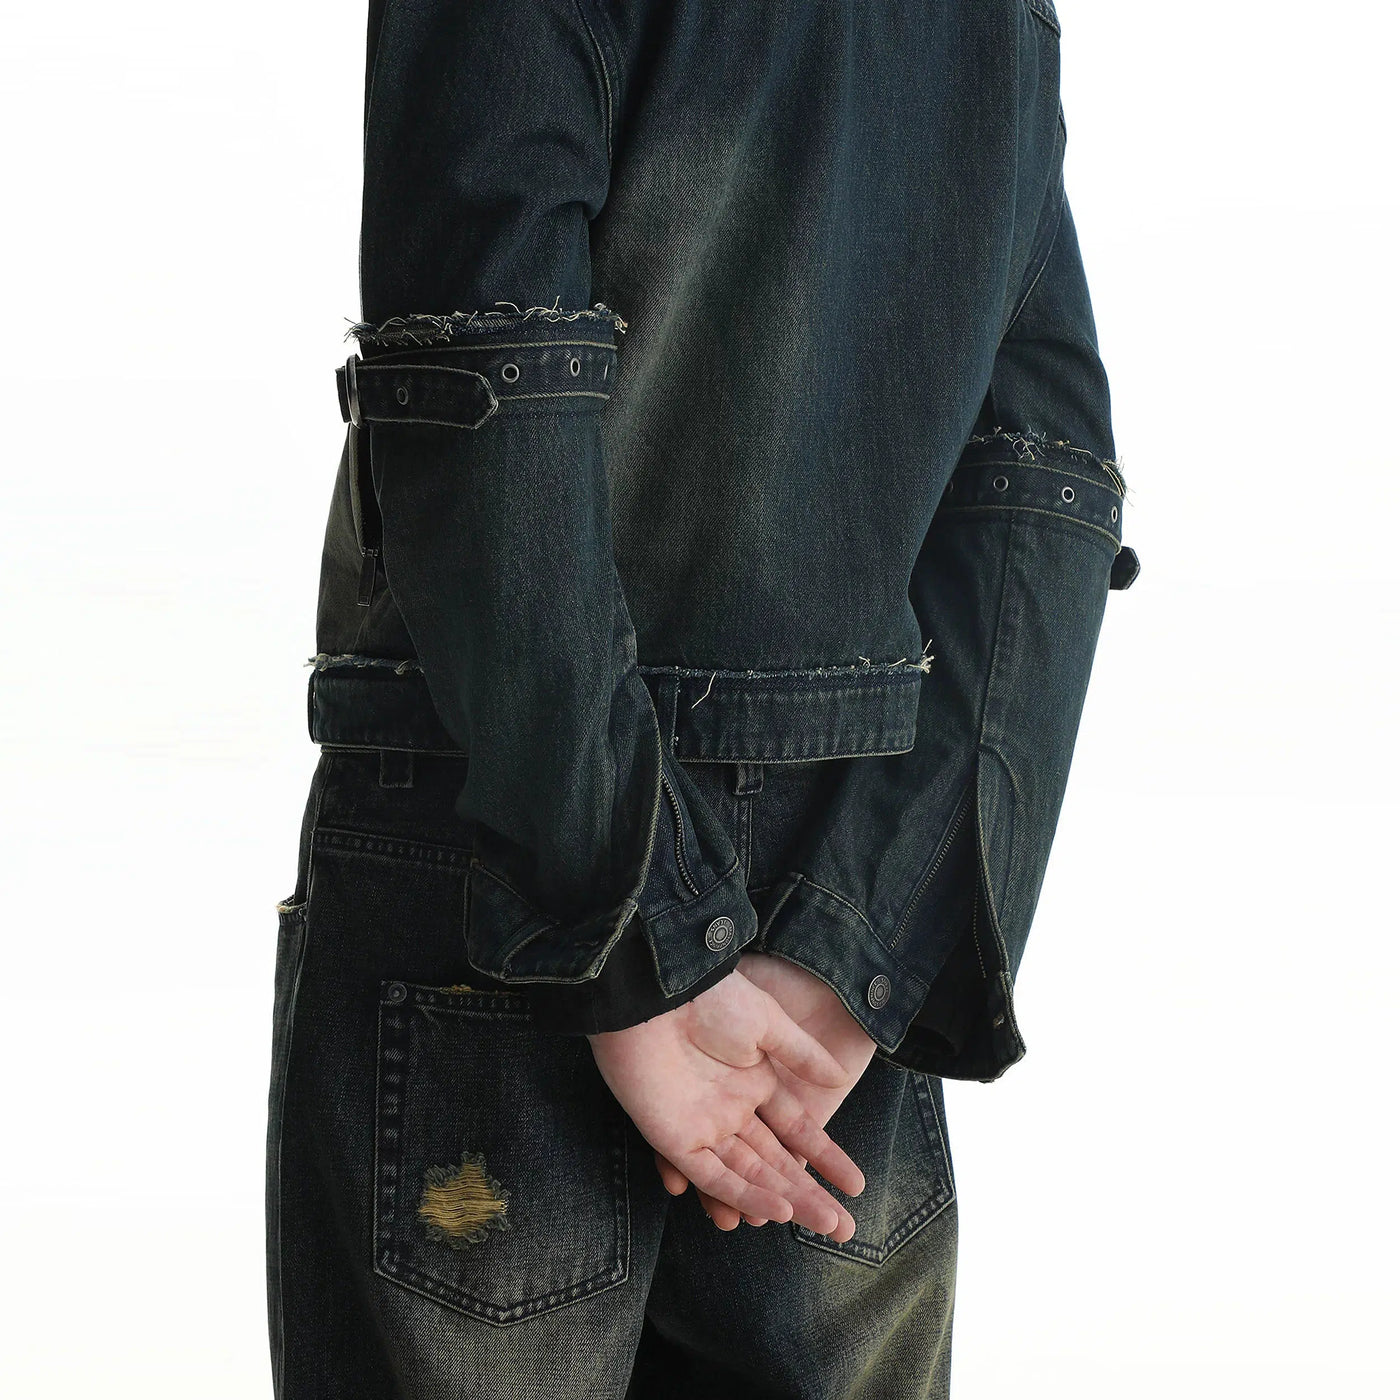 Distressed Strap Belts Denim Jacket Korean Street Fashion Jacket By Mason Prince Shop Online at OH Vault